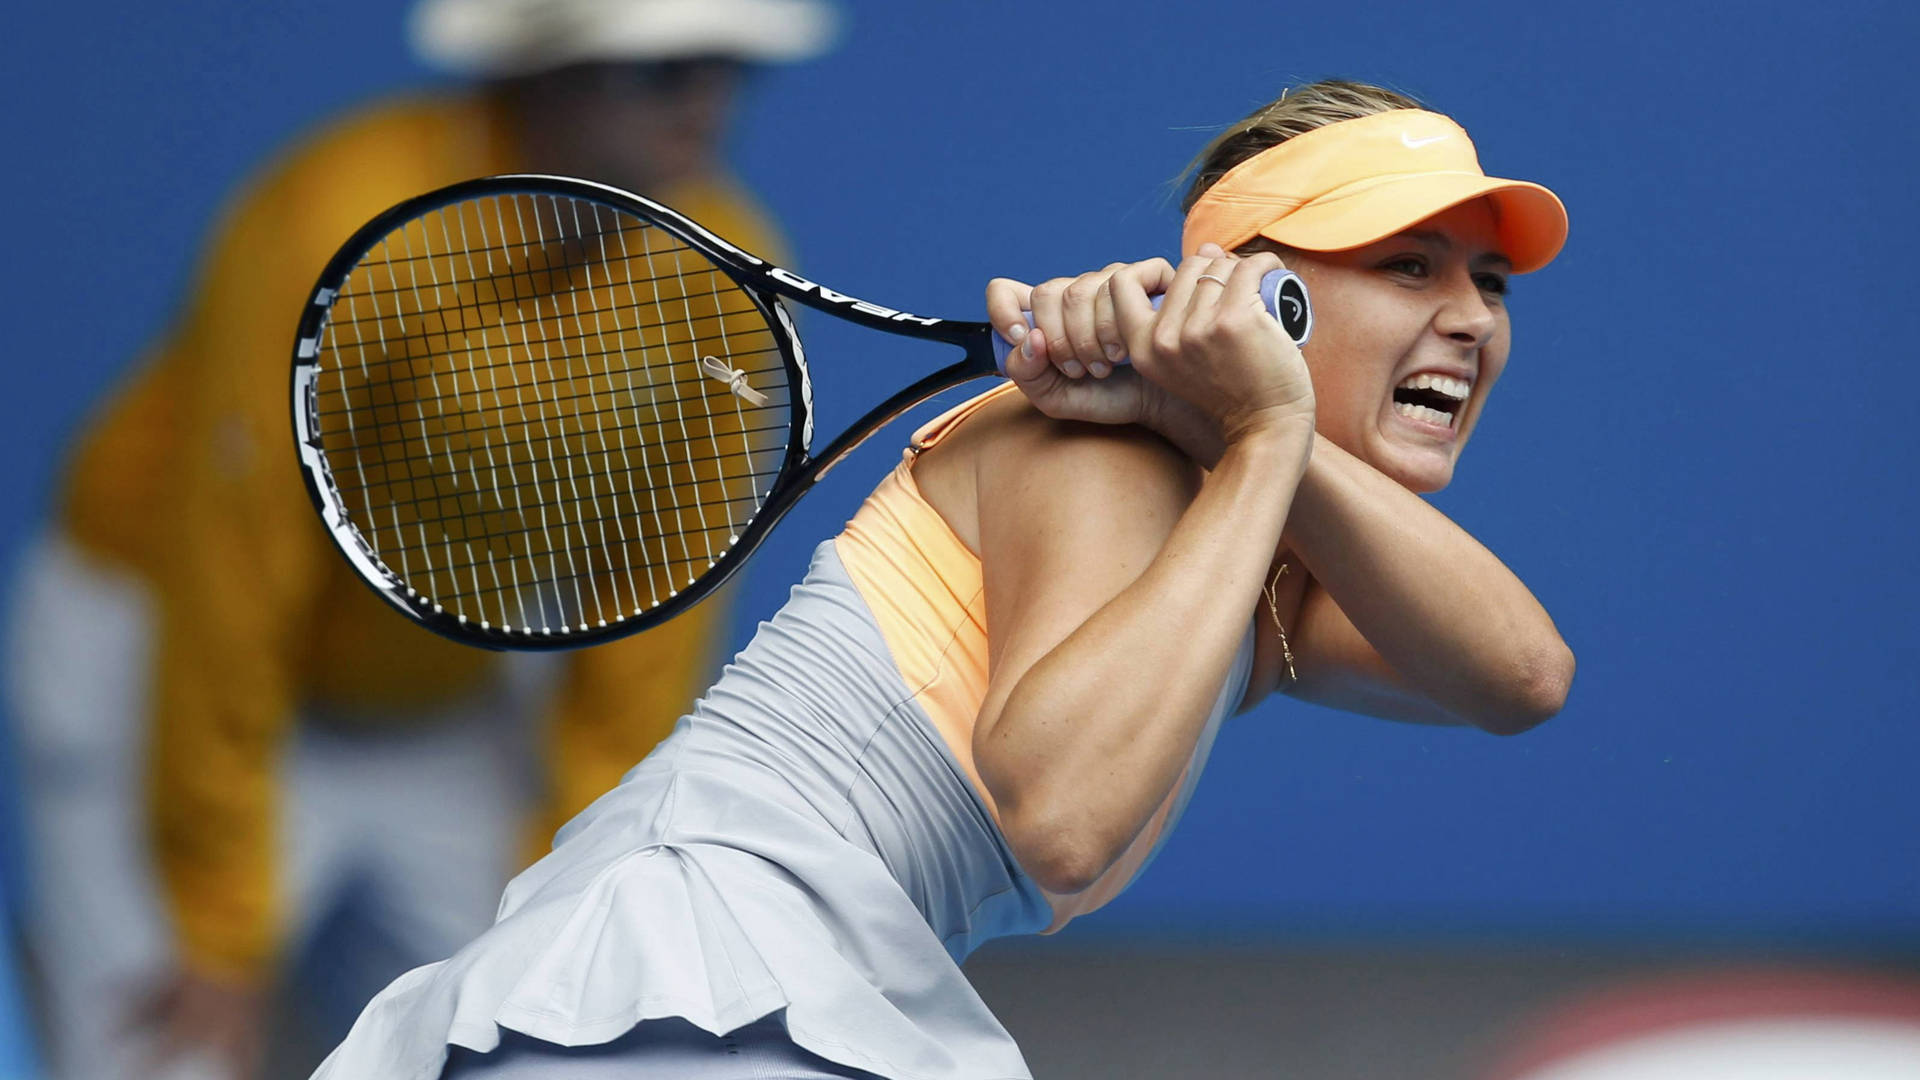 Maria Sharapova 2011 Australian Open Wallpaper